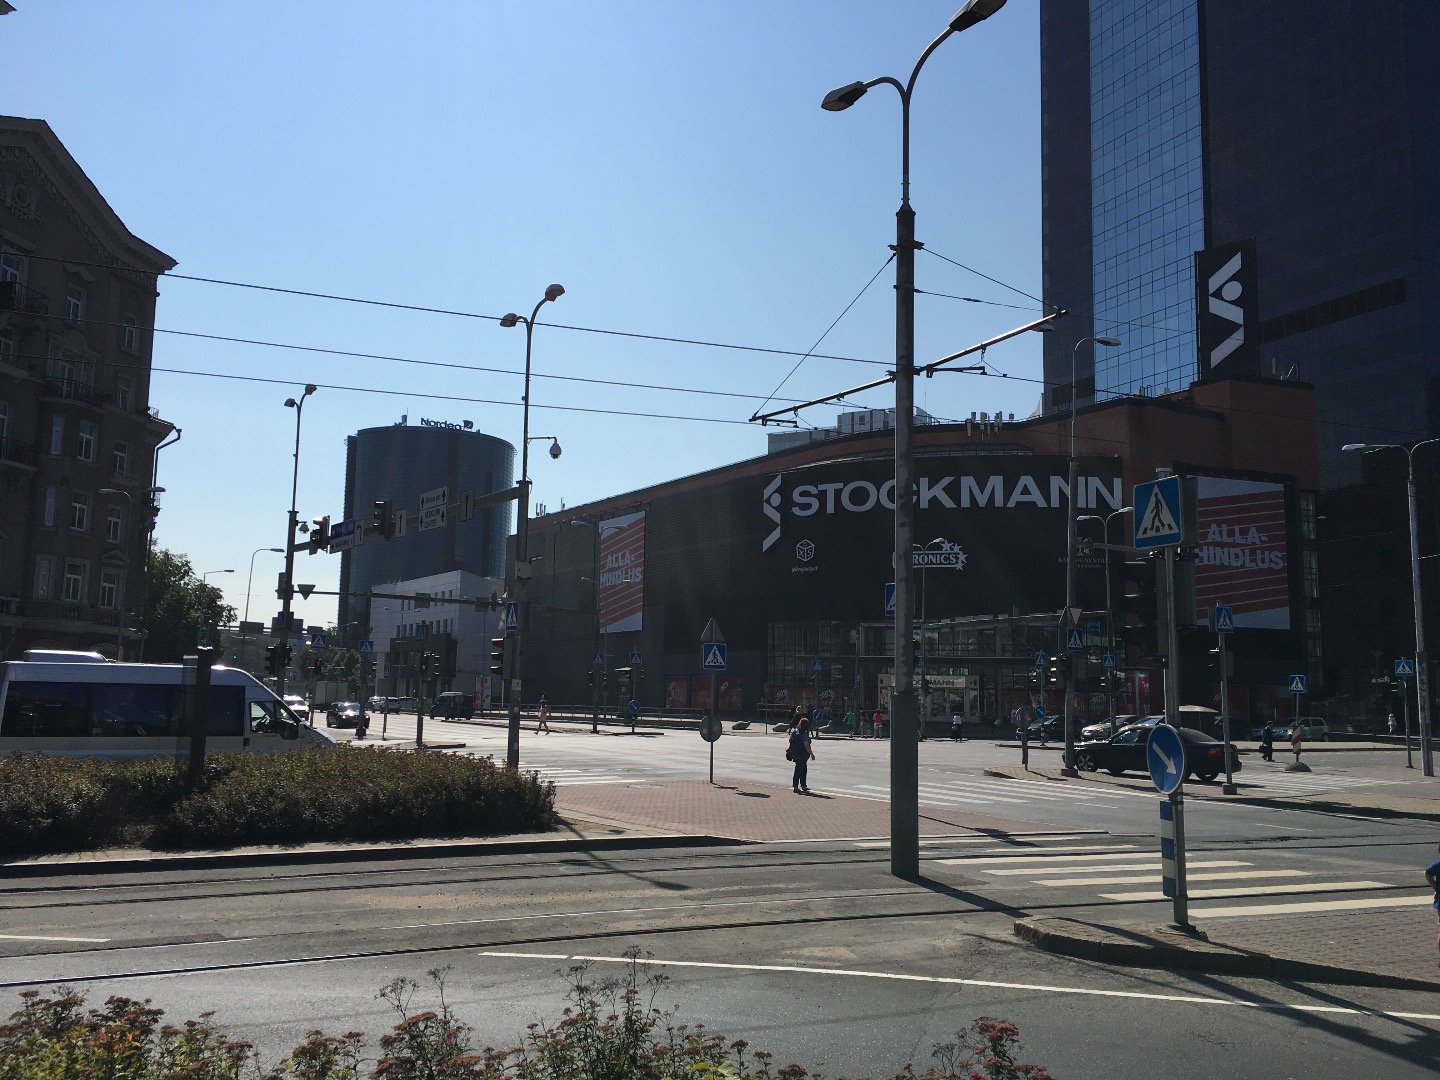 Stockmann's storehouse in Tallinn at the corner of Tartu highway and Liivalaia Street rephoto